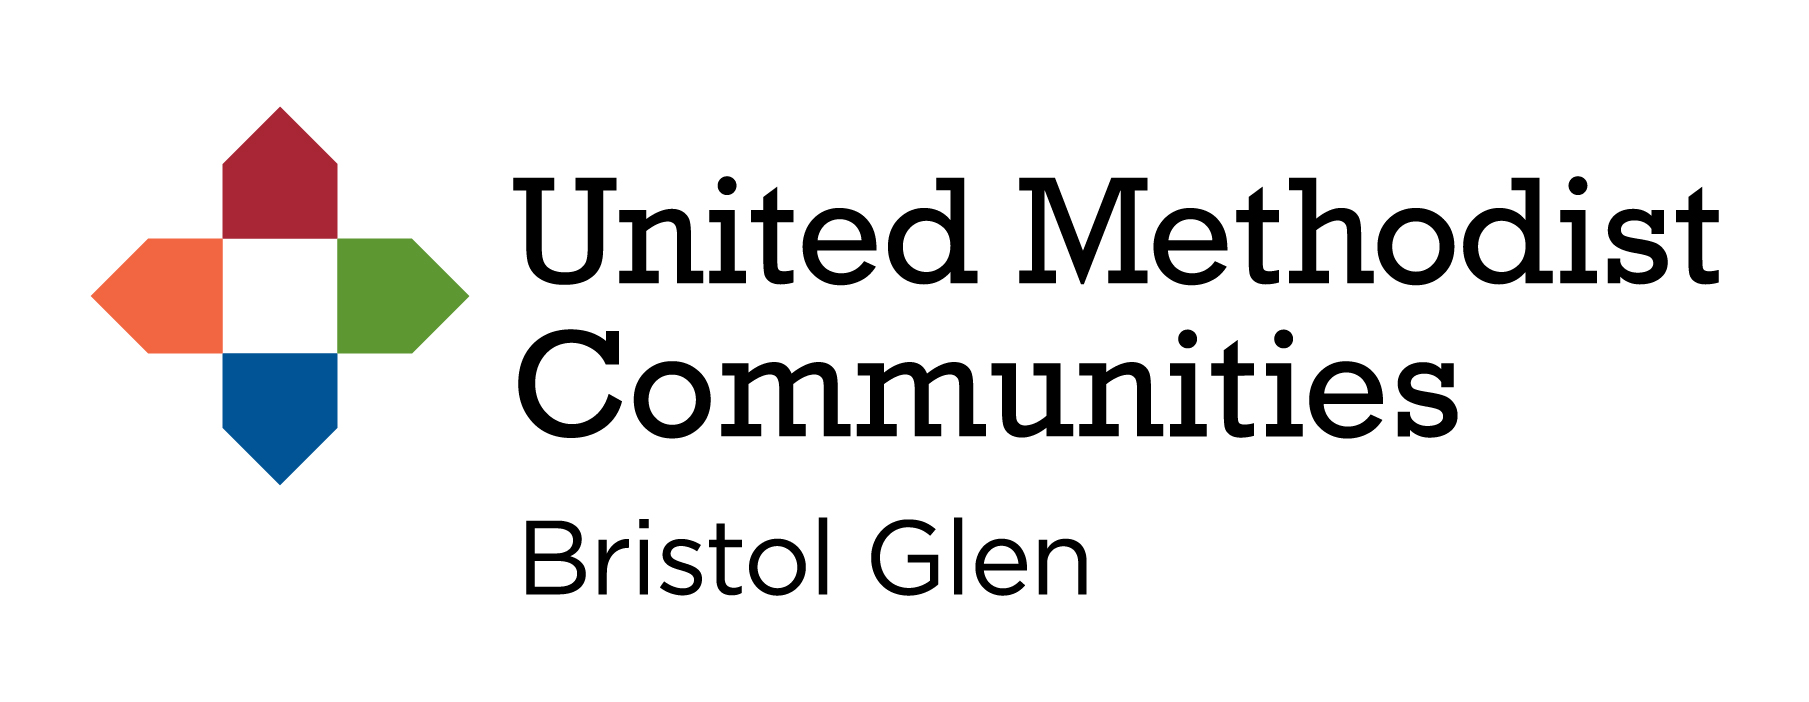 United Methodist Communities at Bristol Glen logo